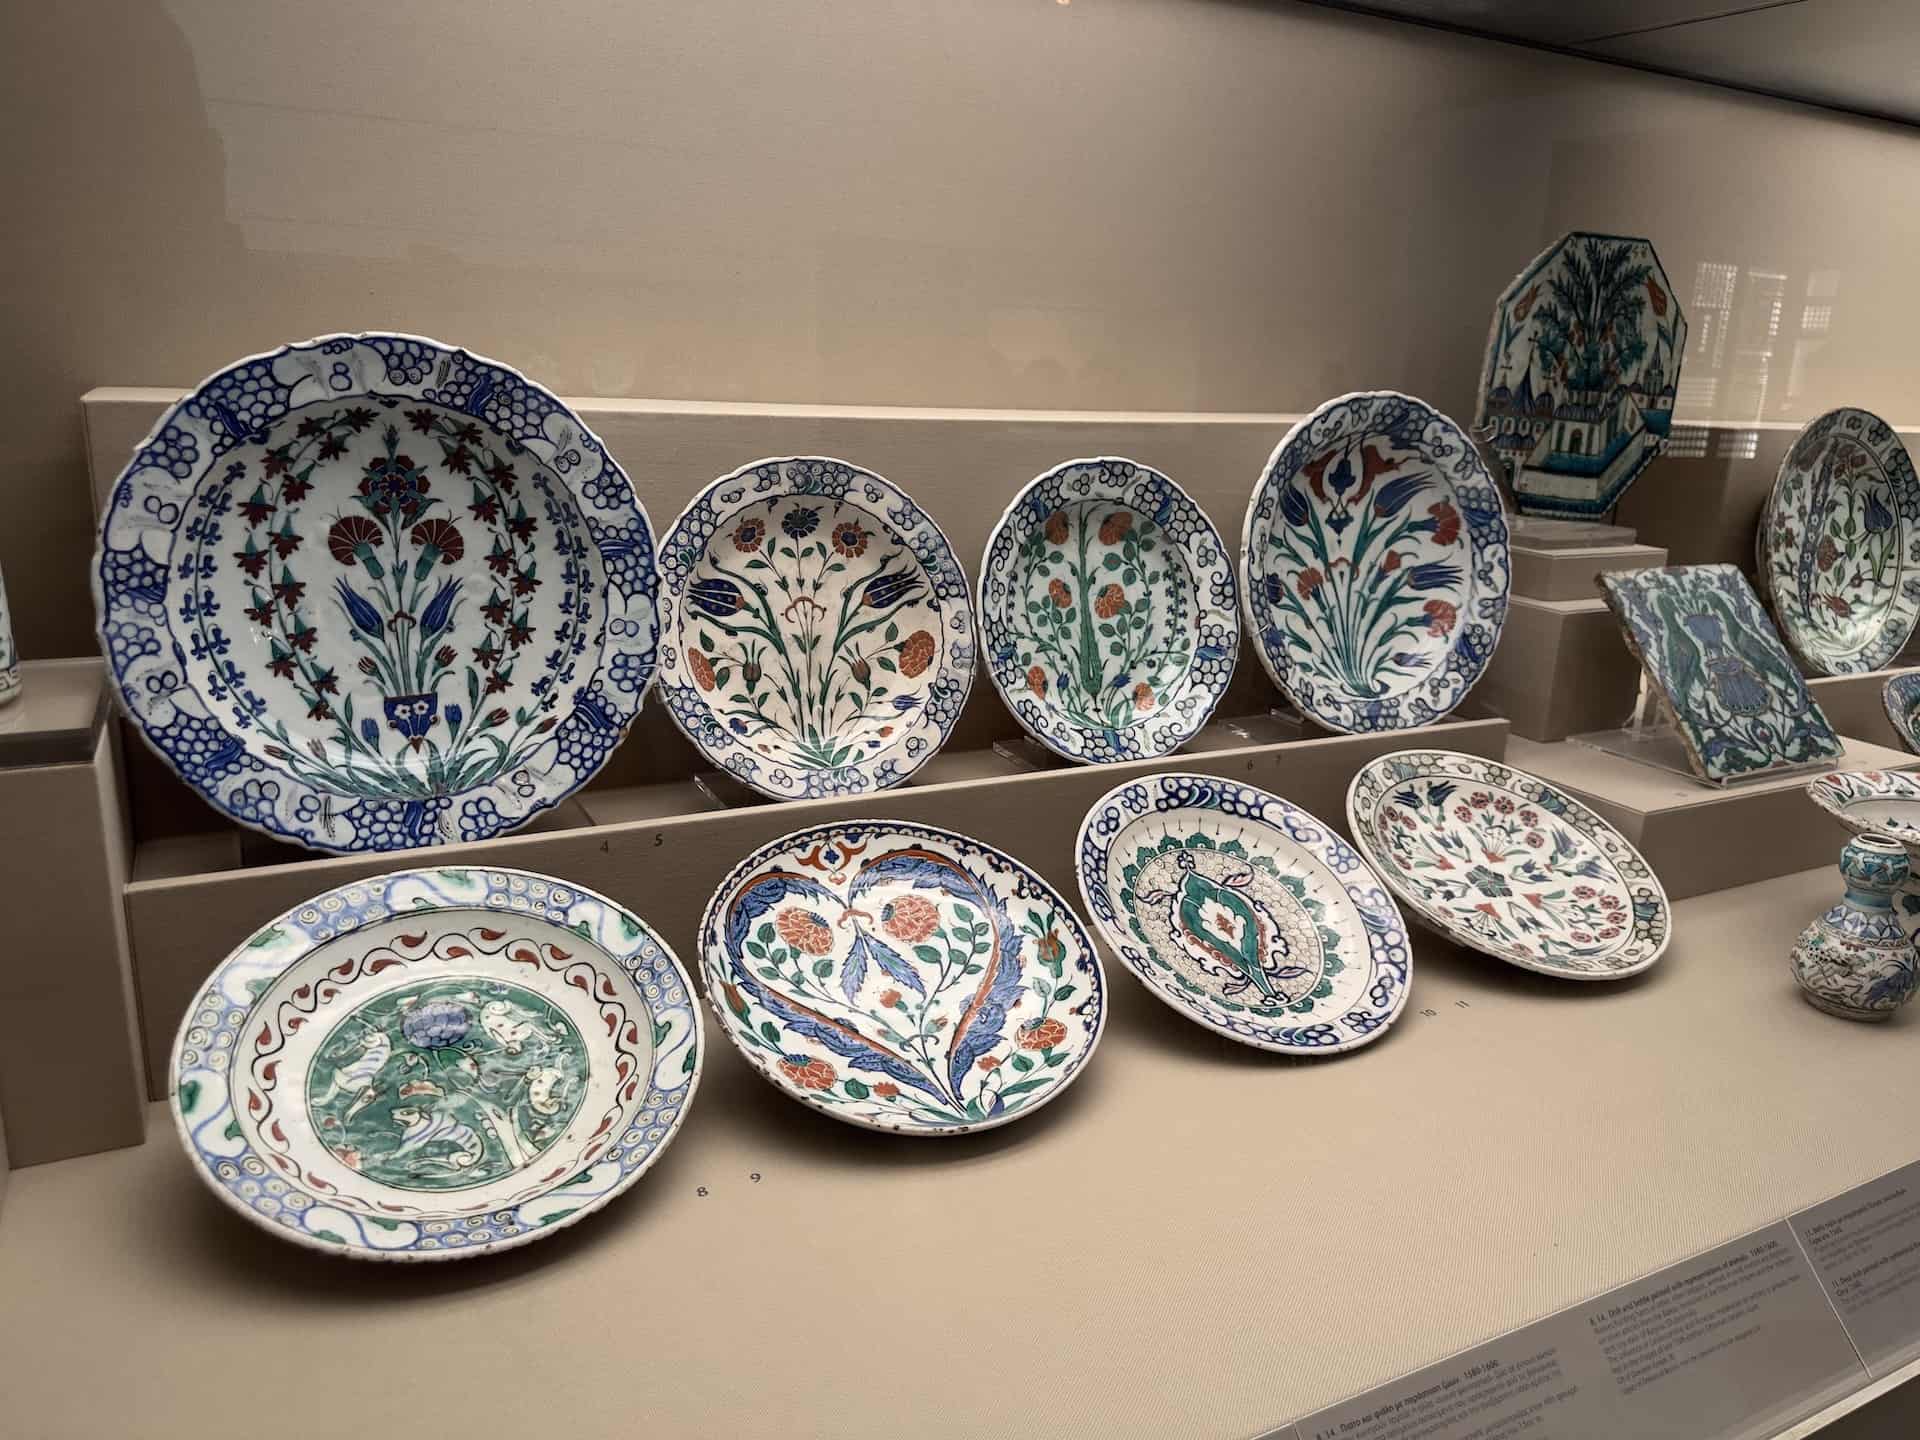 Ottoman ceramic ware; 16th-17th century at the Benaki Museum of Islamic Art in Athens, Greece